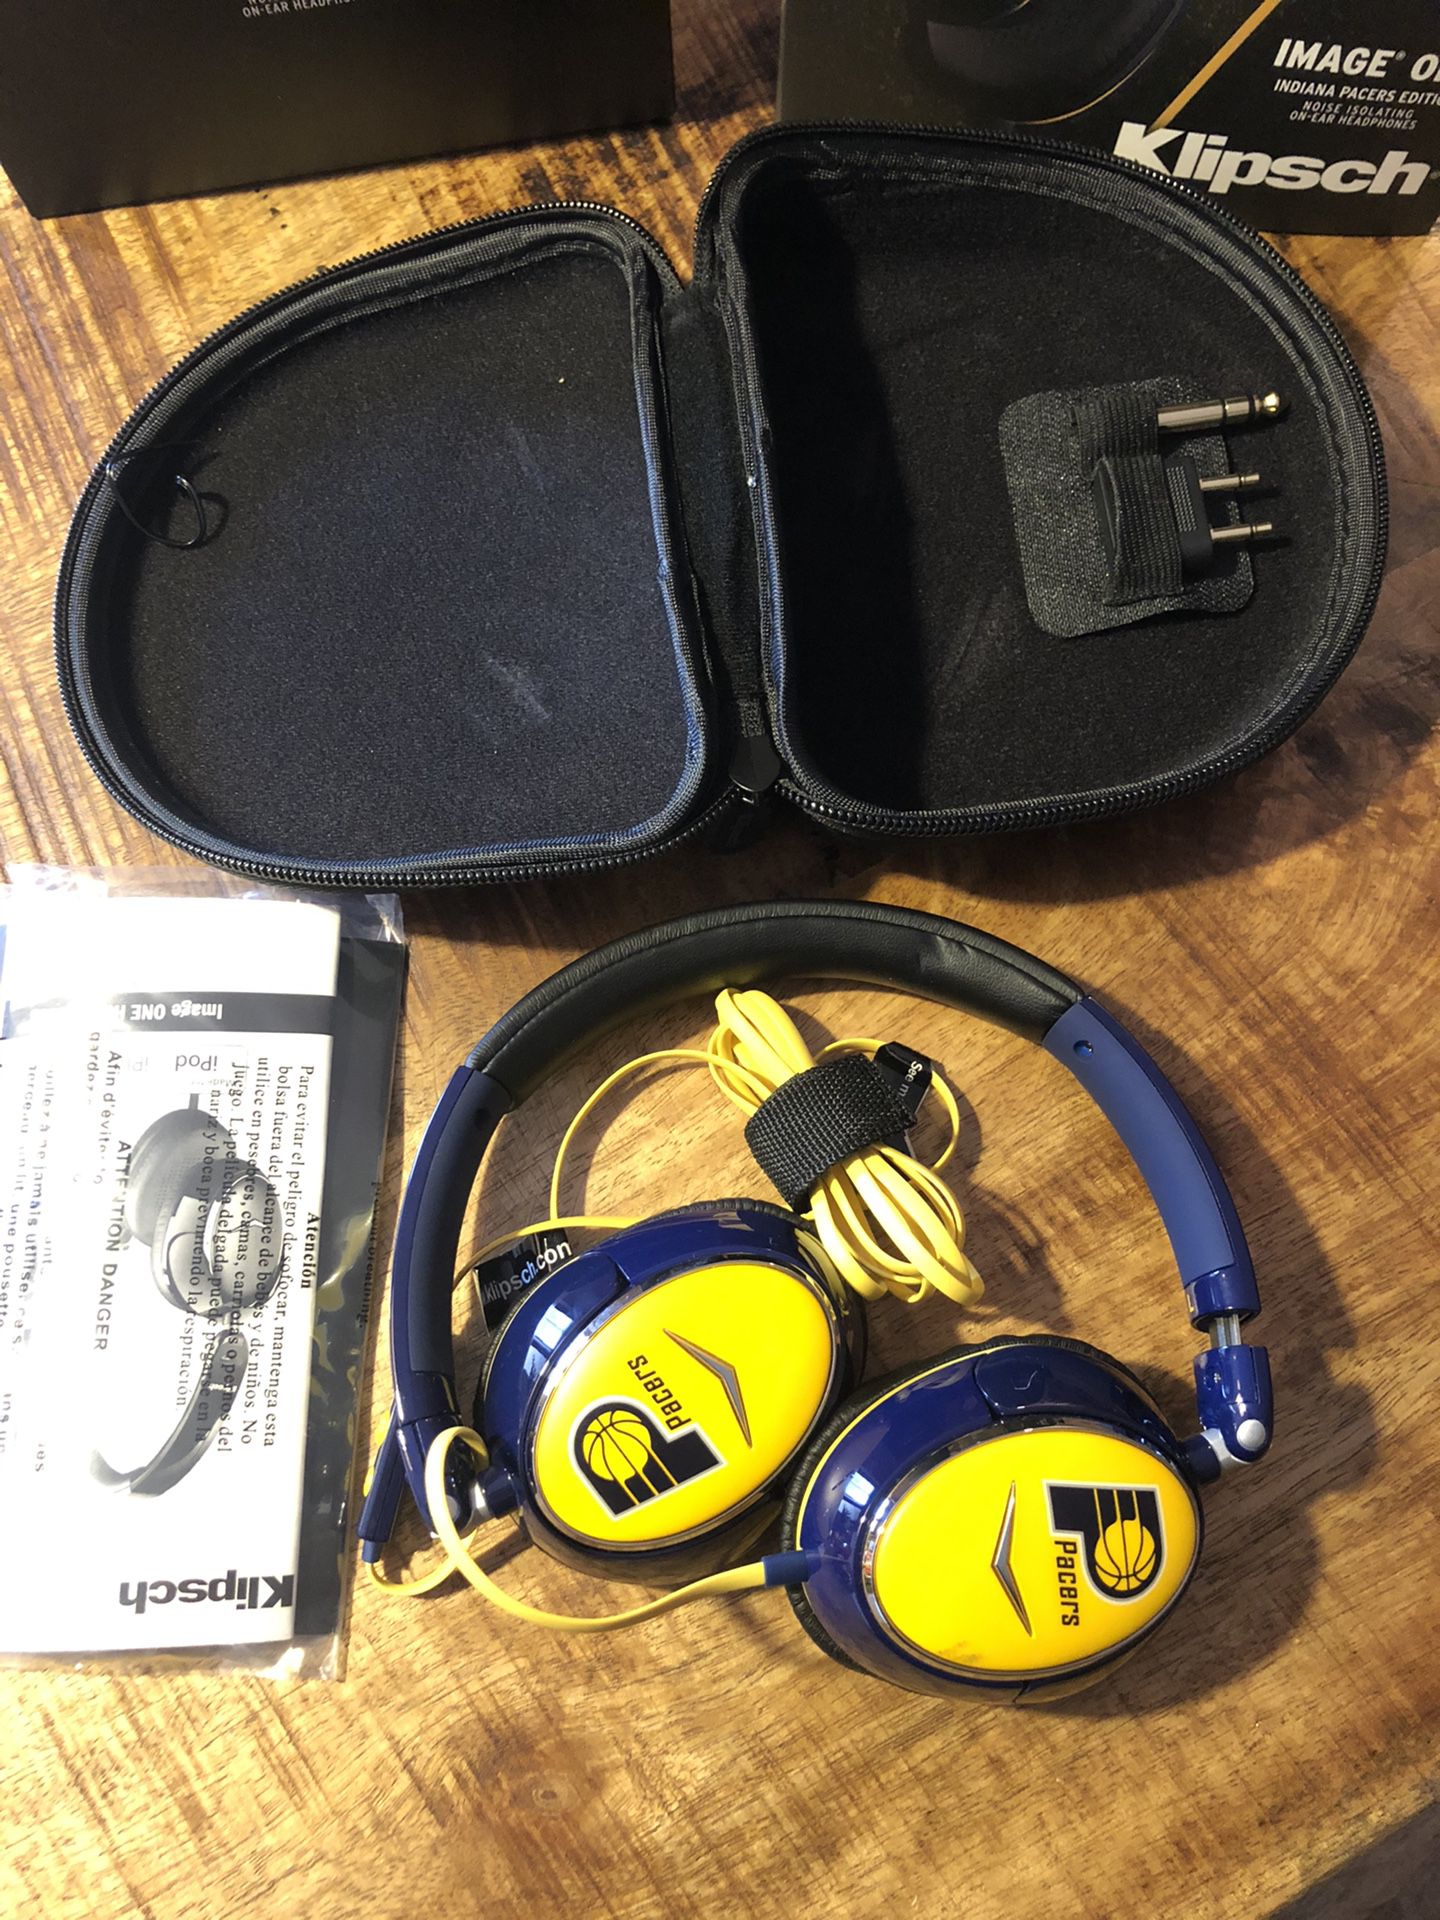 NIB Klipsch Pacers headphones with case and original box